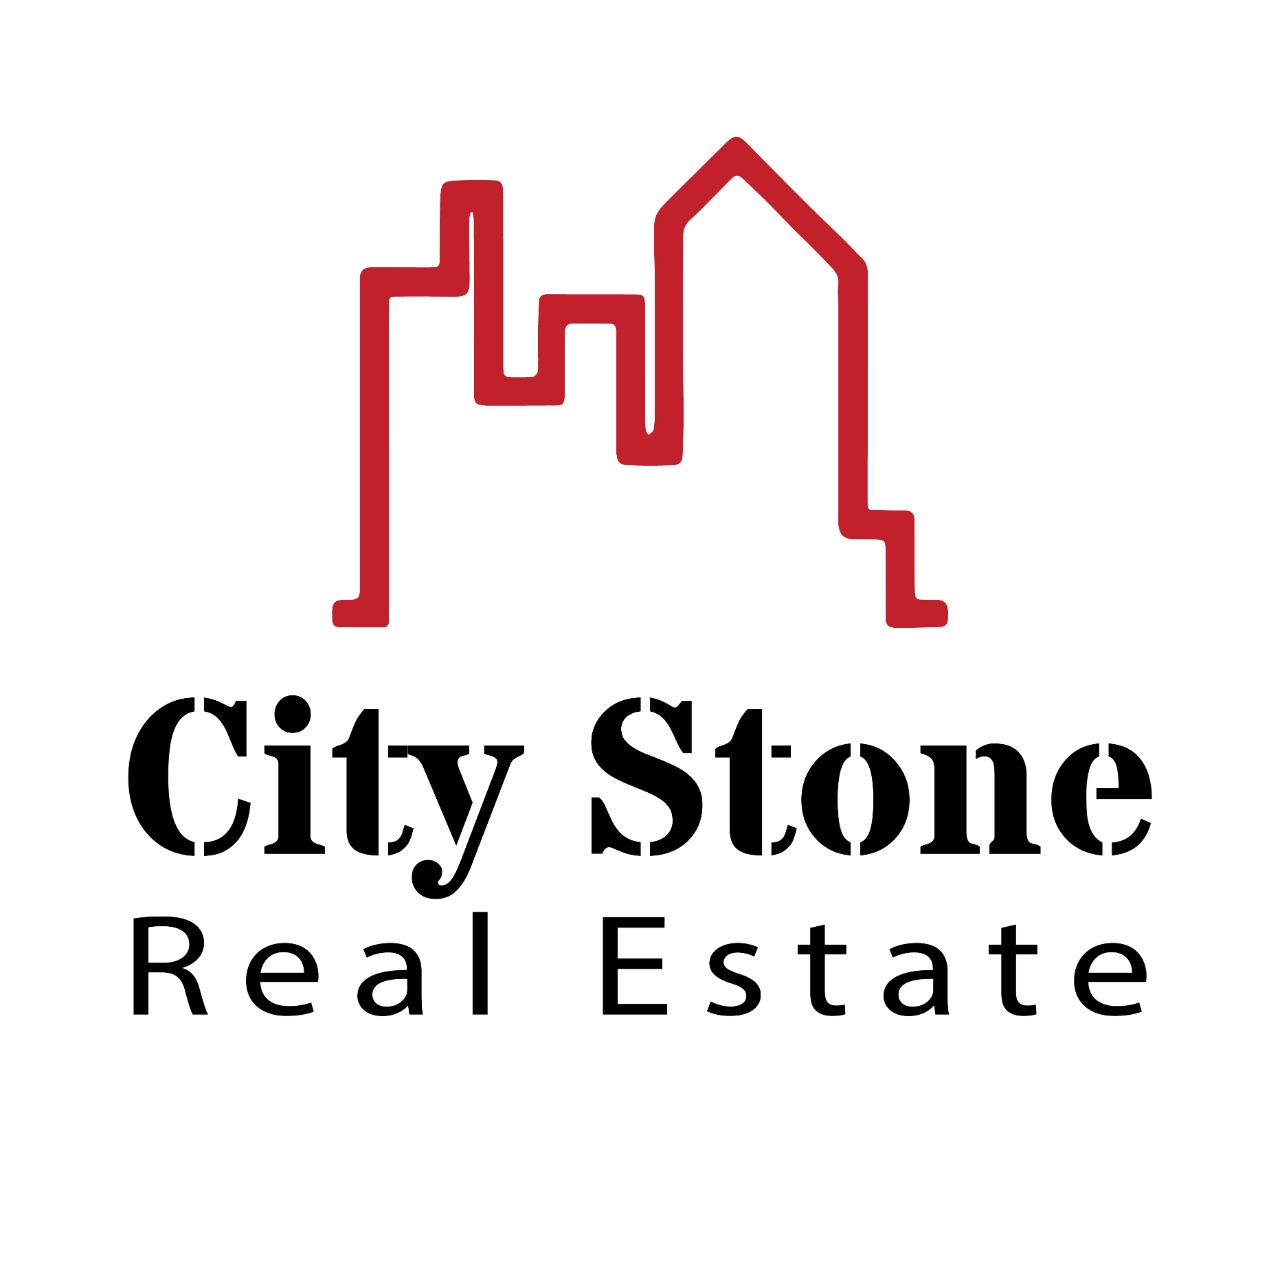 City Stone Real Estate